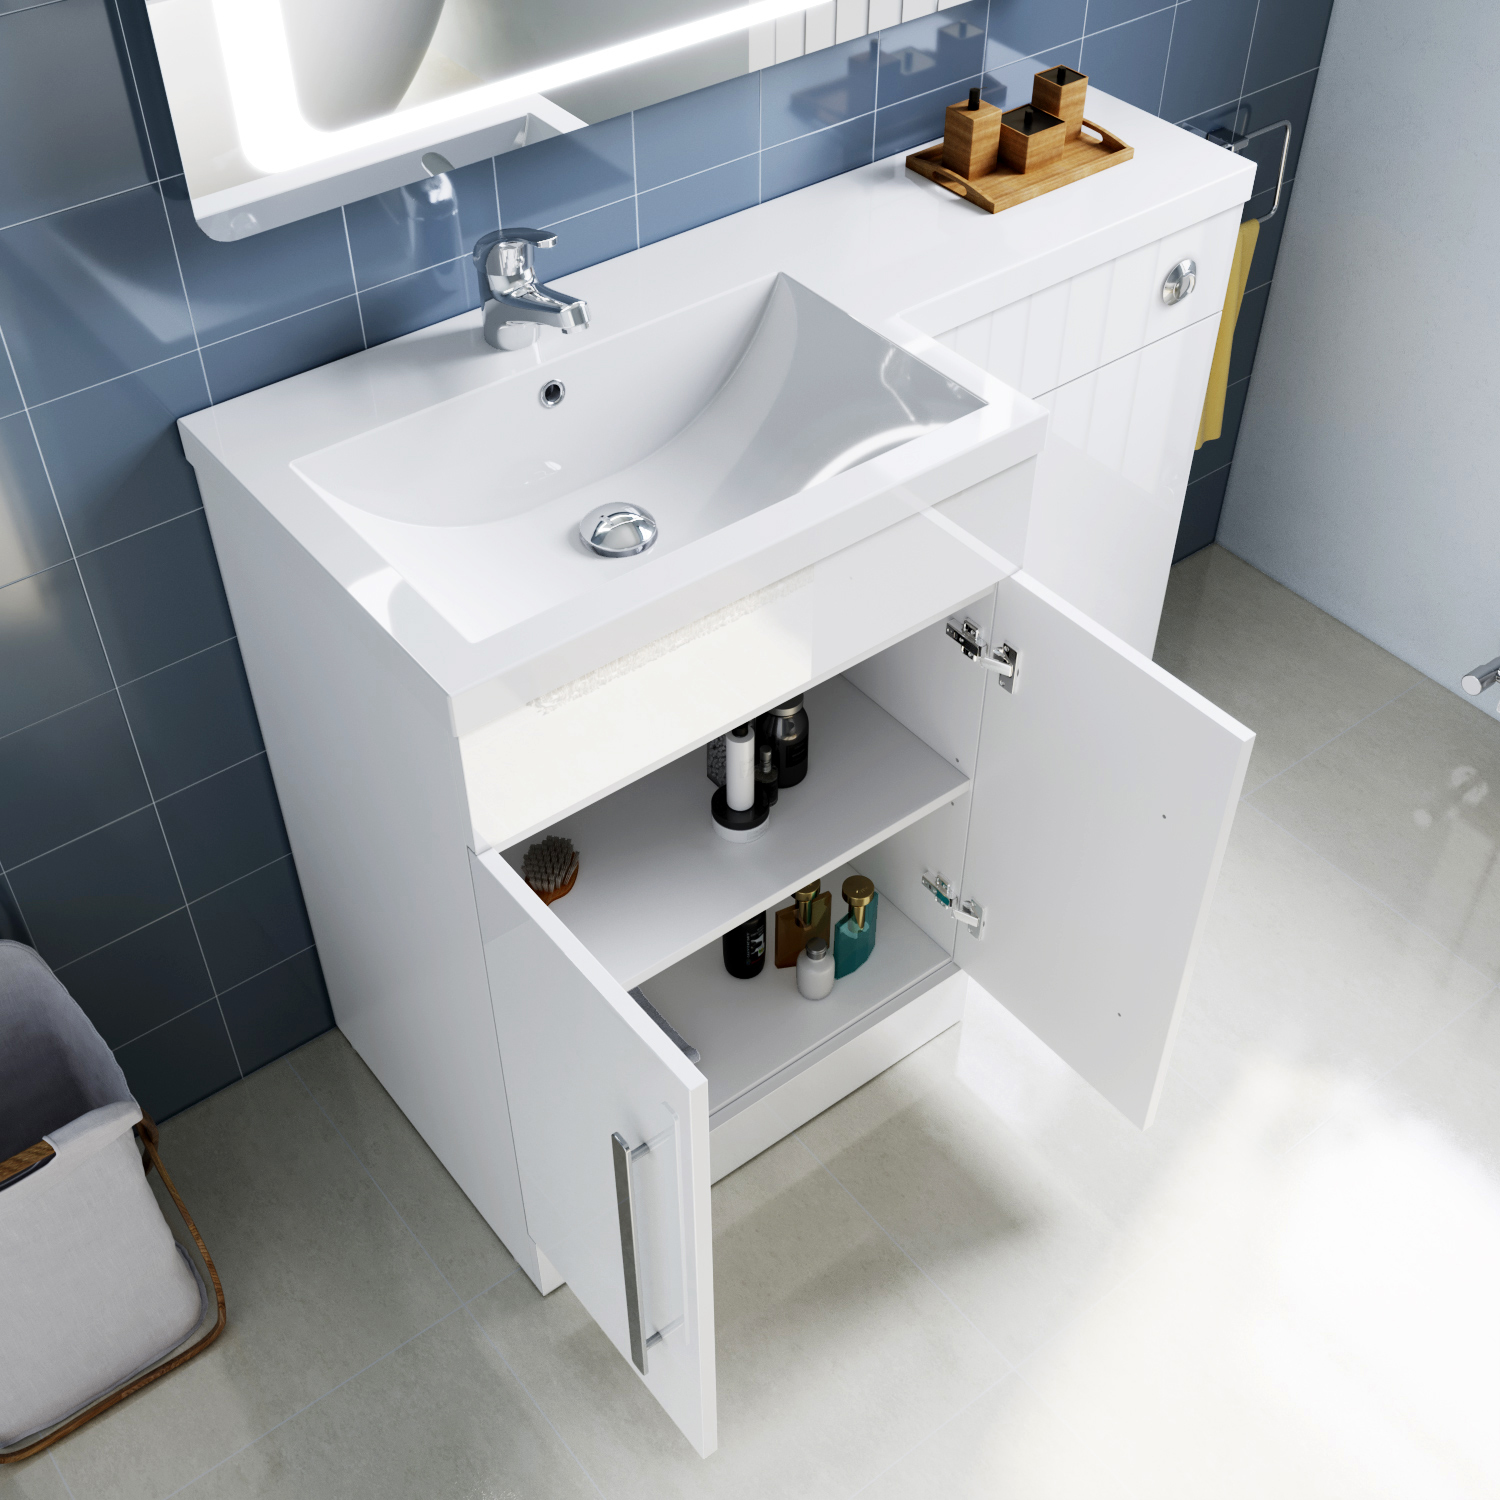 Bathroom Vanity Unit Sink toilet Floor Standing White Cupboard Cabinet